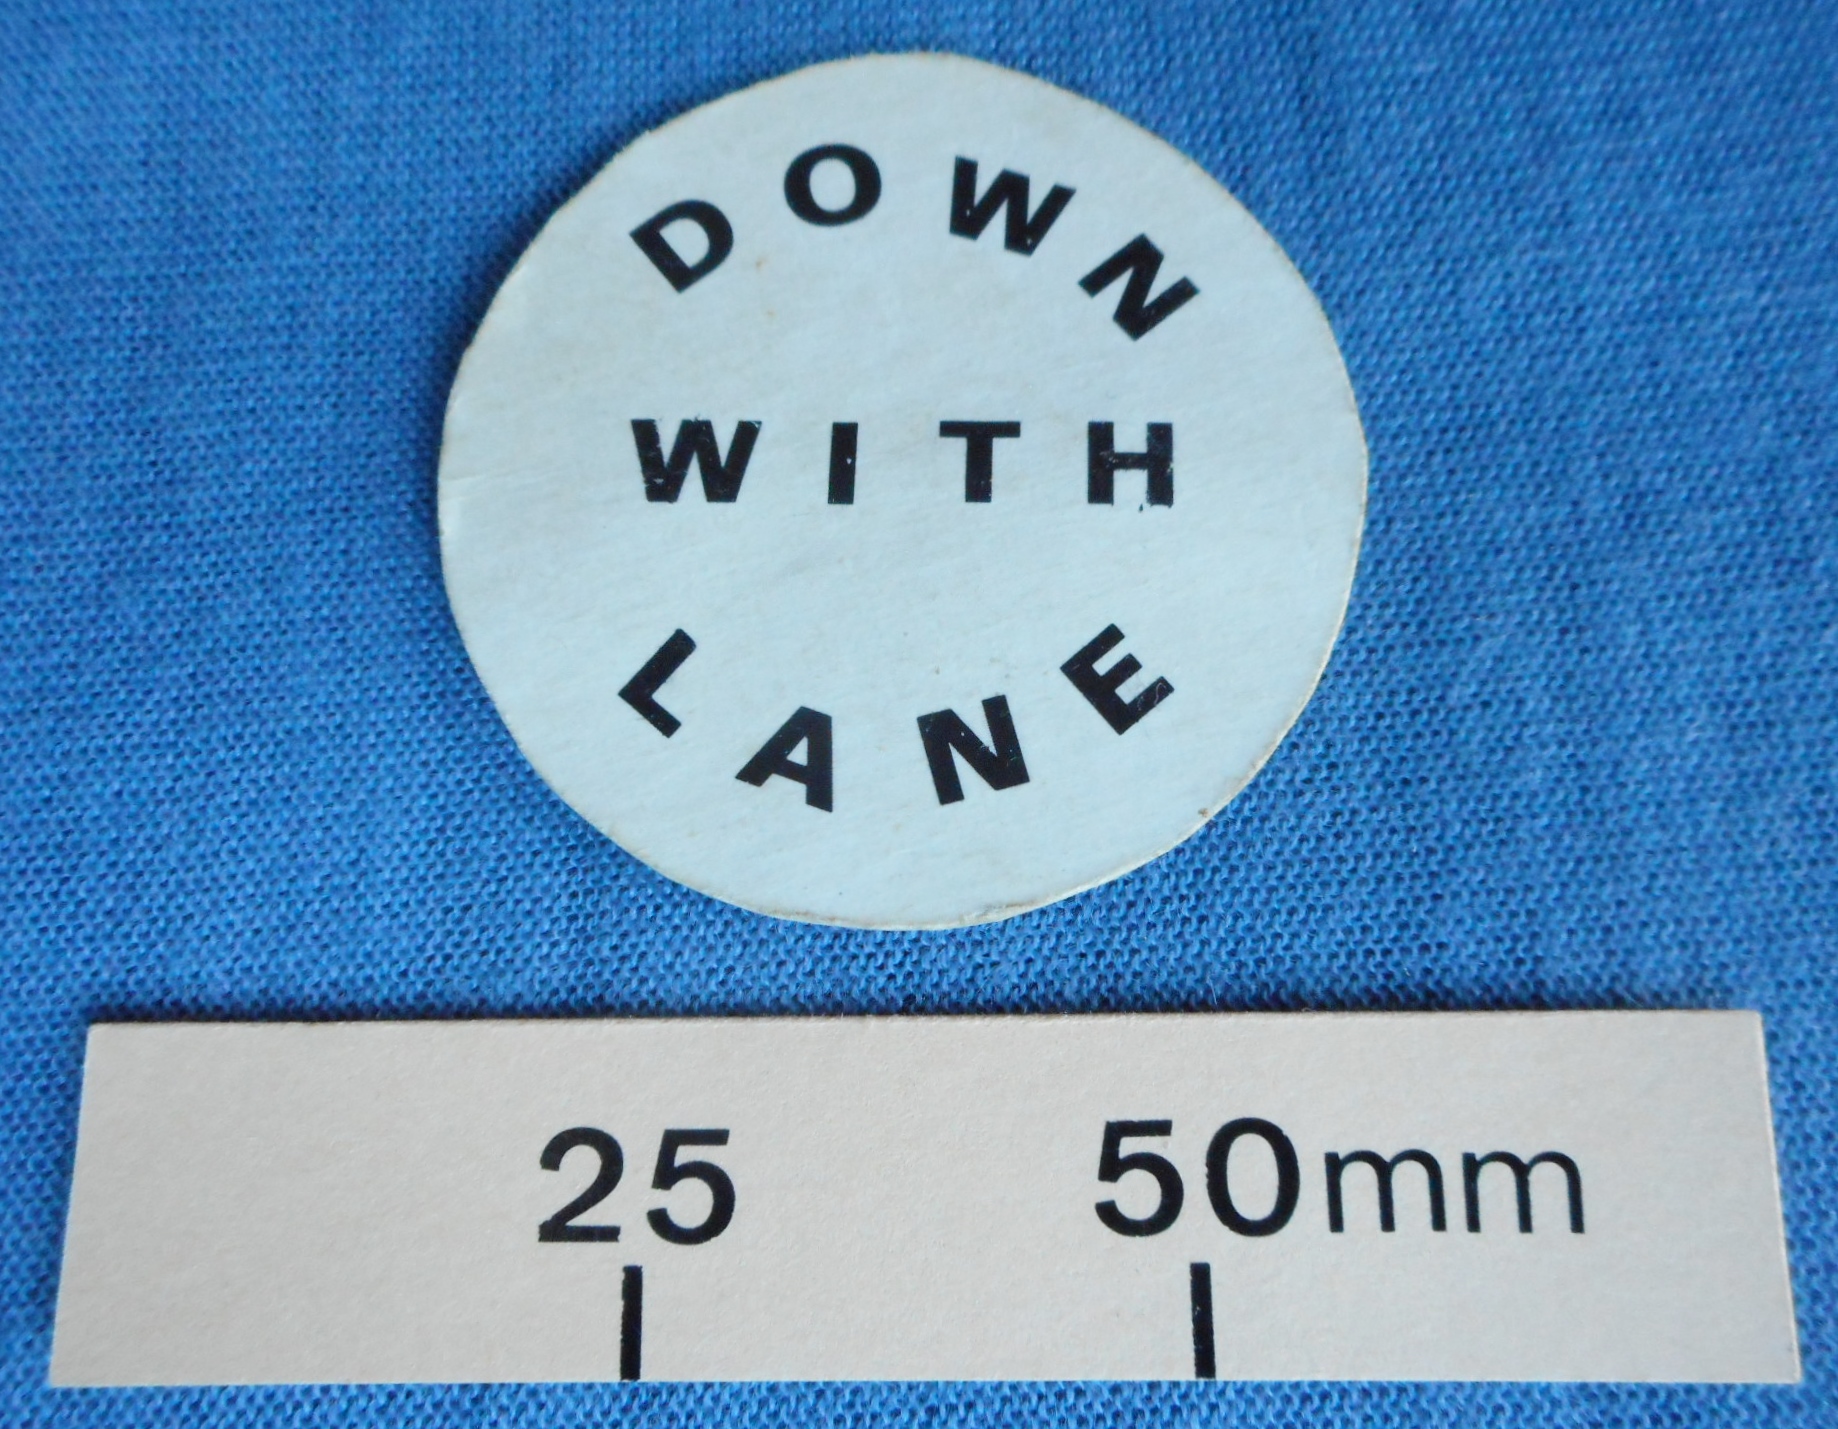 A badge to play a joke on Frank Lane